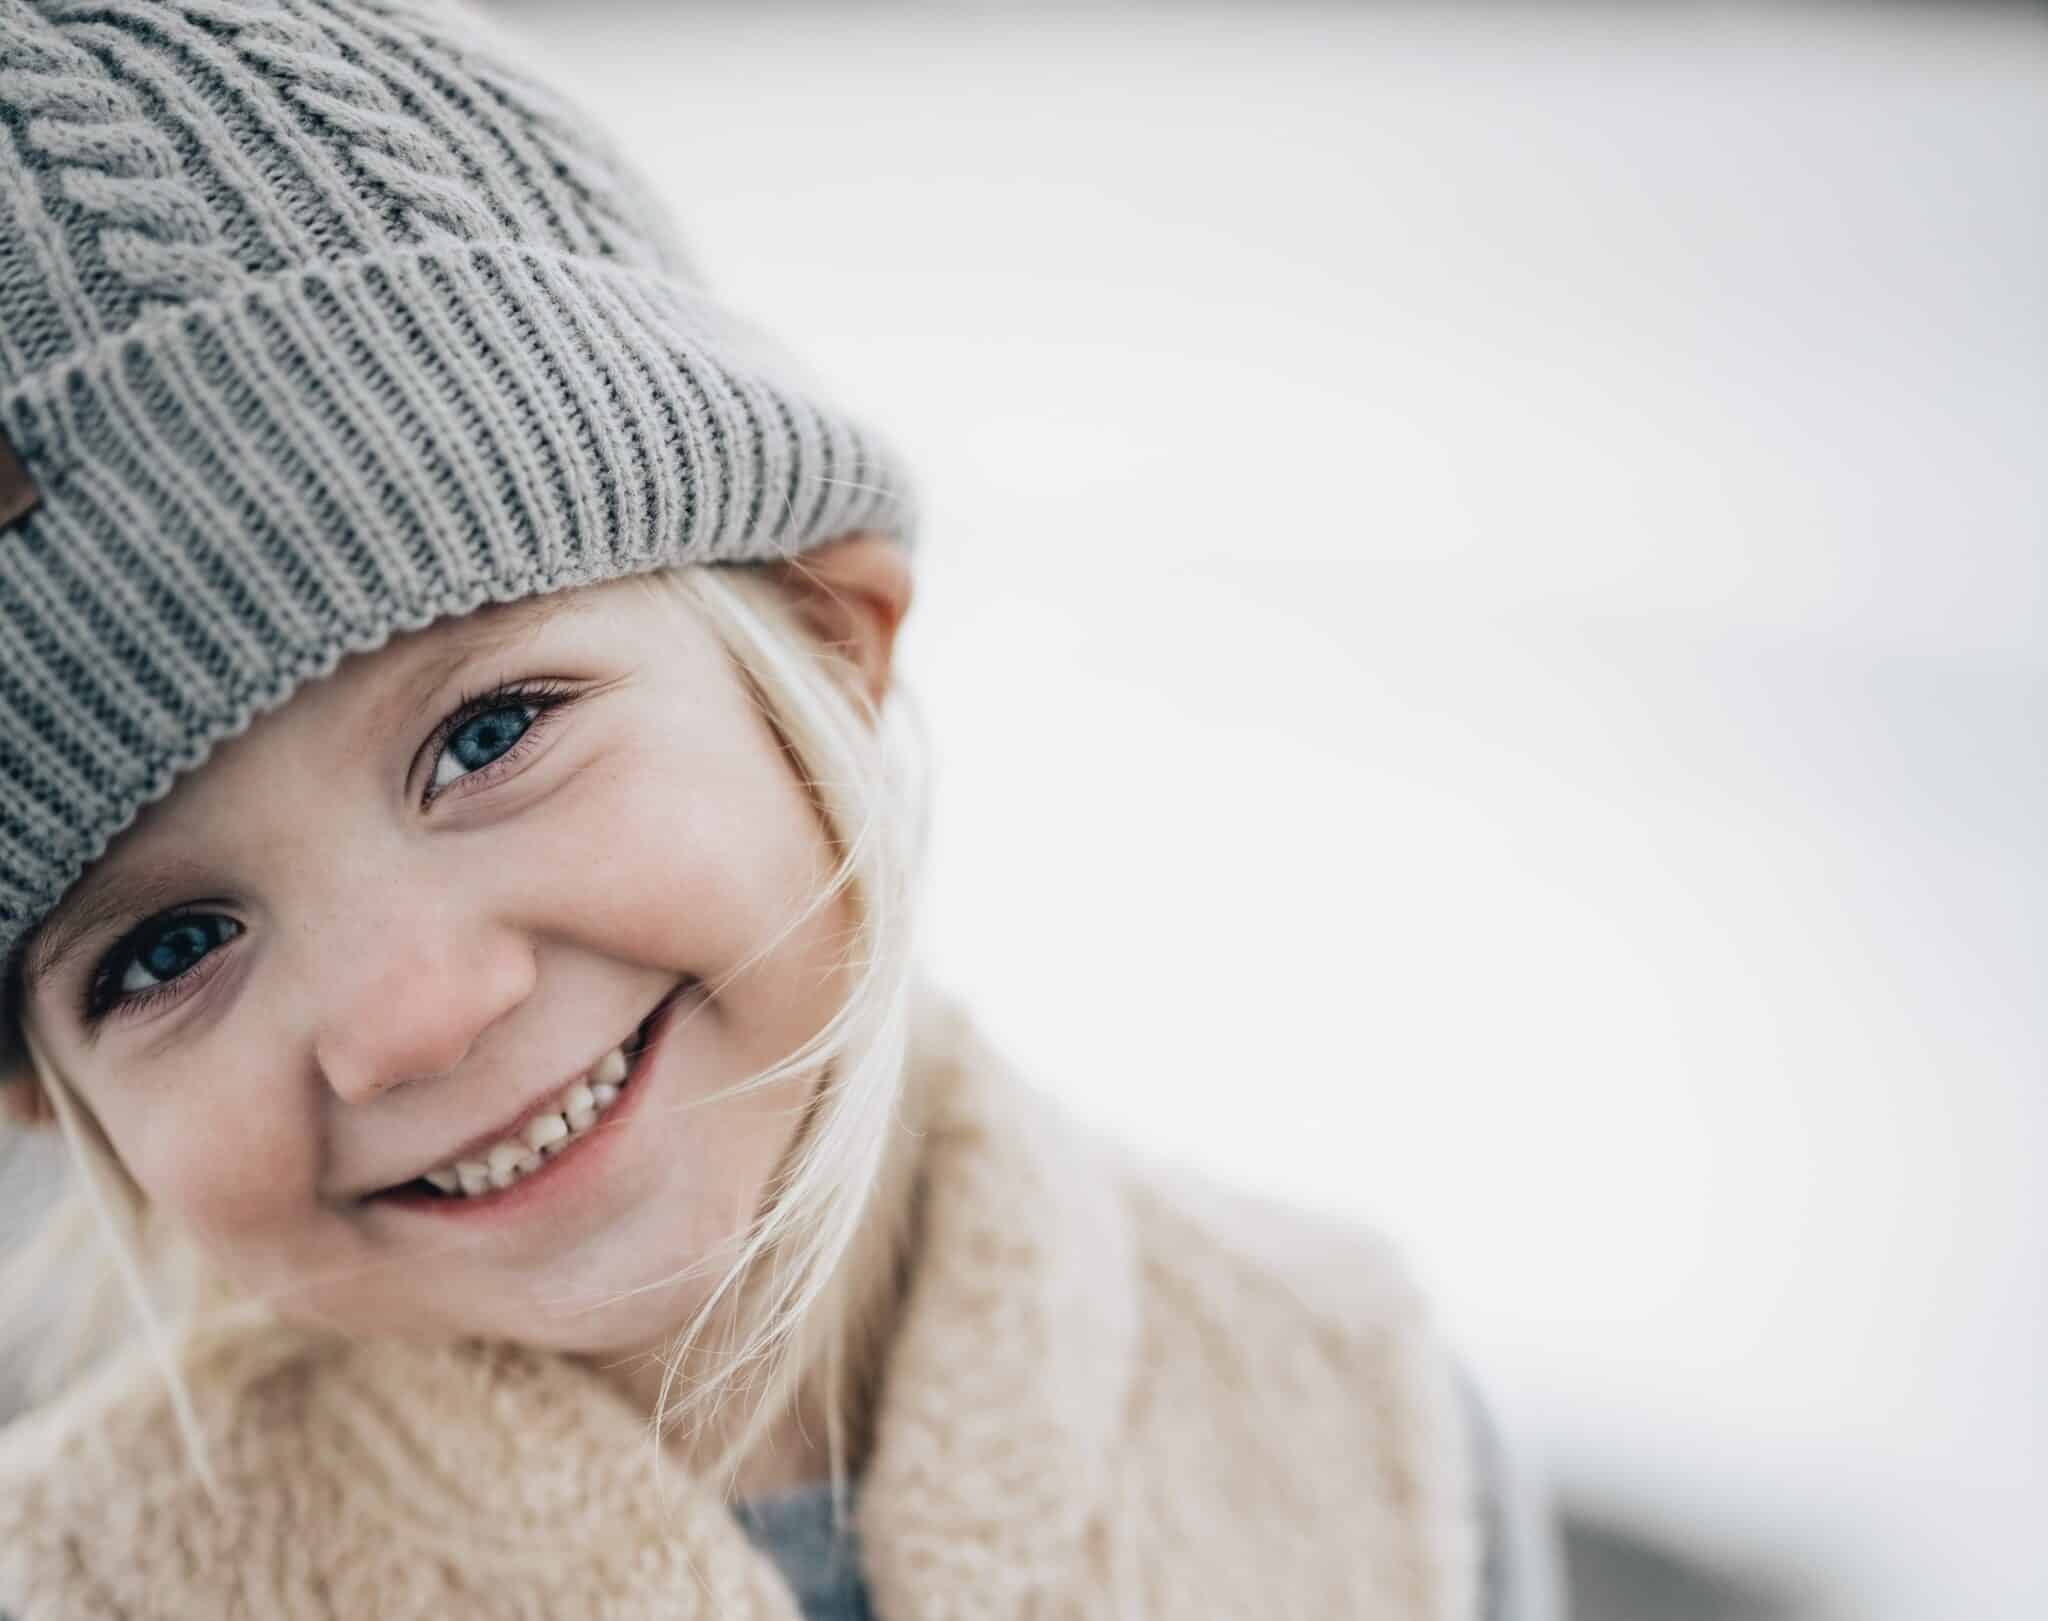 kid smiling | Photo by Brendan Beale on Unsplash